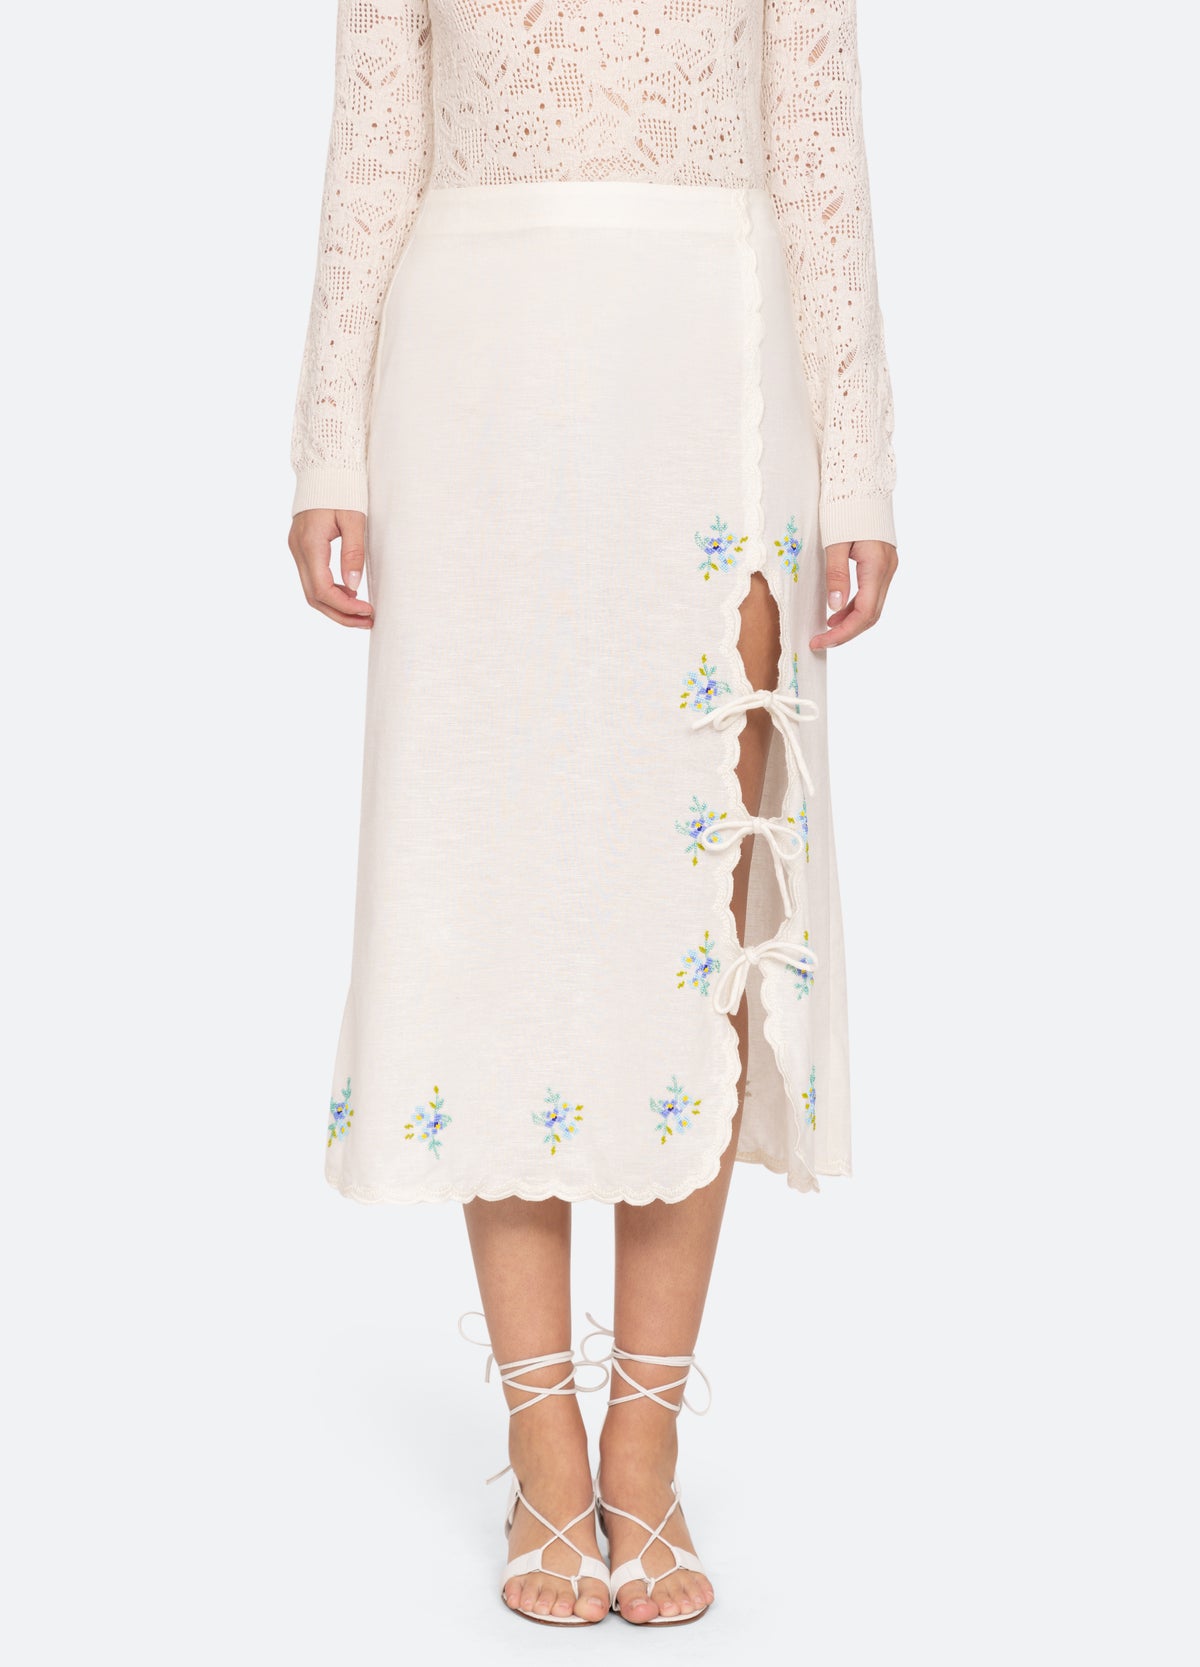 white-tania skirt-front view